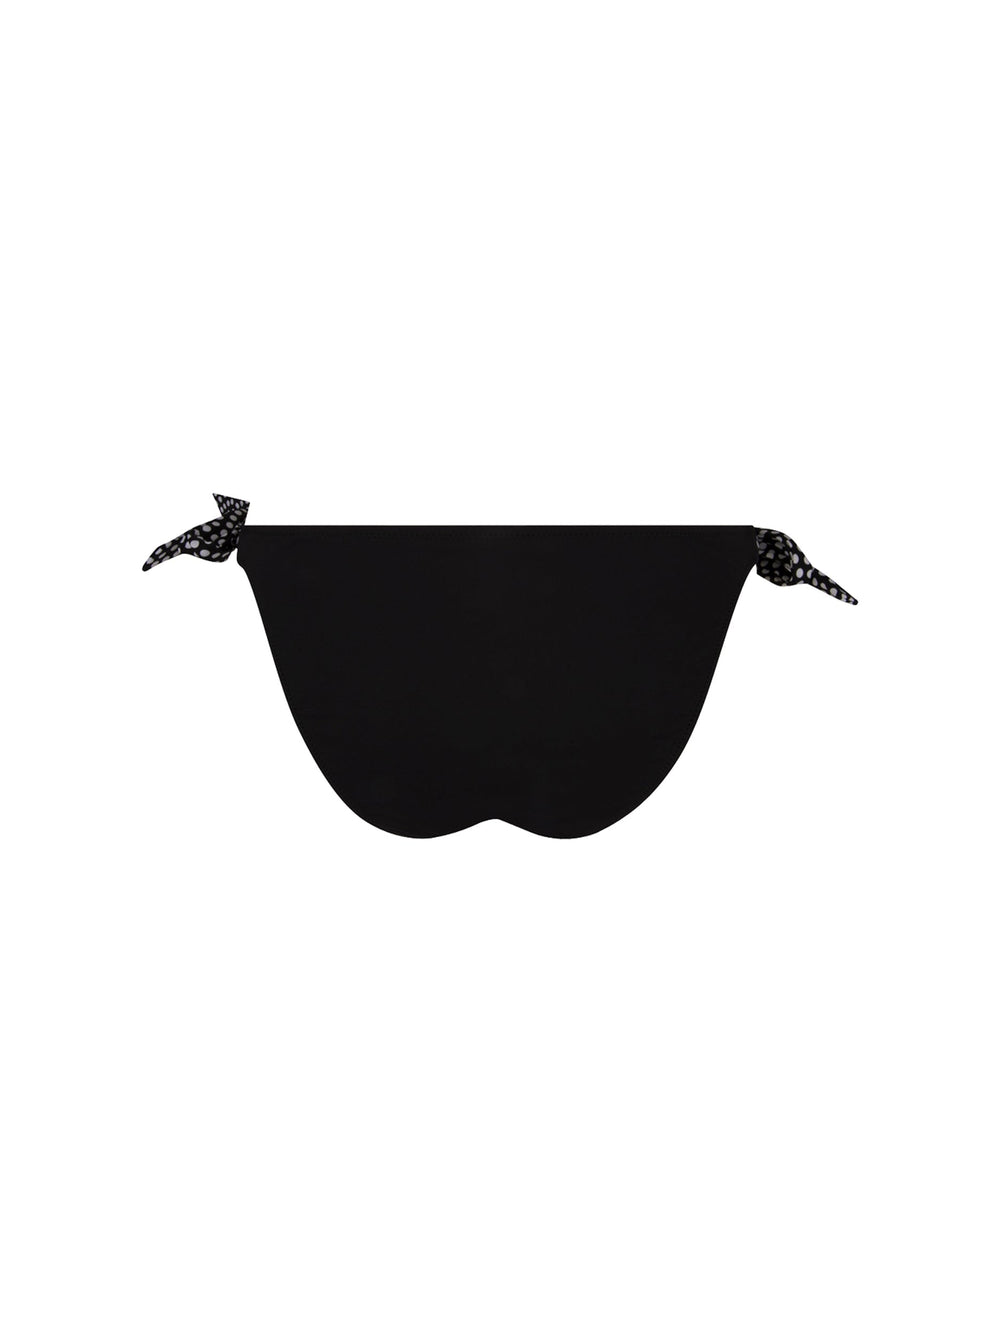 Antigel by Lise Charmel - Плавки-бикини La Muse Dolce Vita с узкими боками Poise Noir Мини-трусики-бикини Antigel by Lise Charmel Swimwear